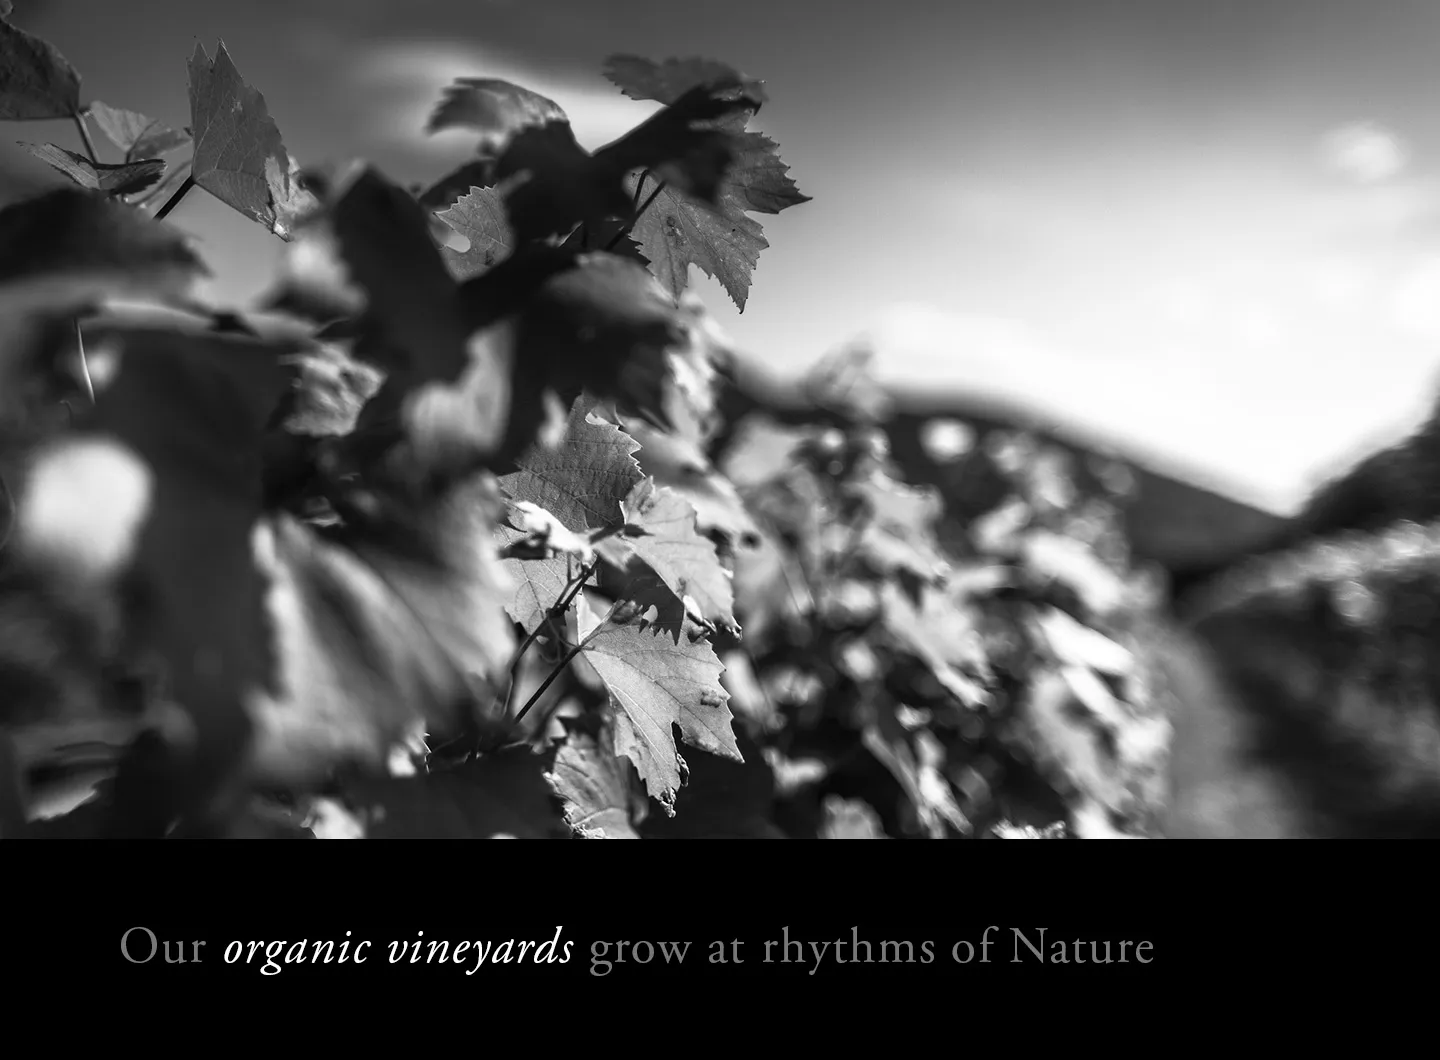 Our organic vineyard grow at rhythms of nature